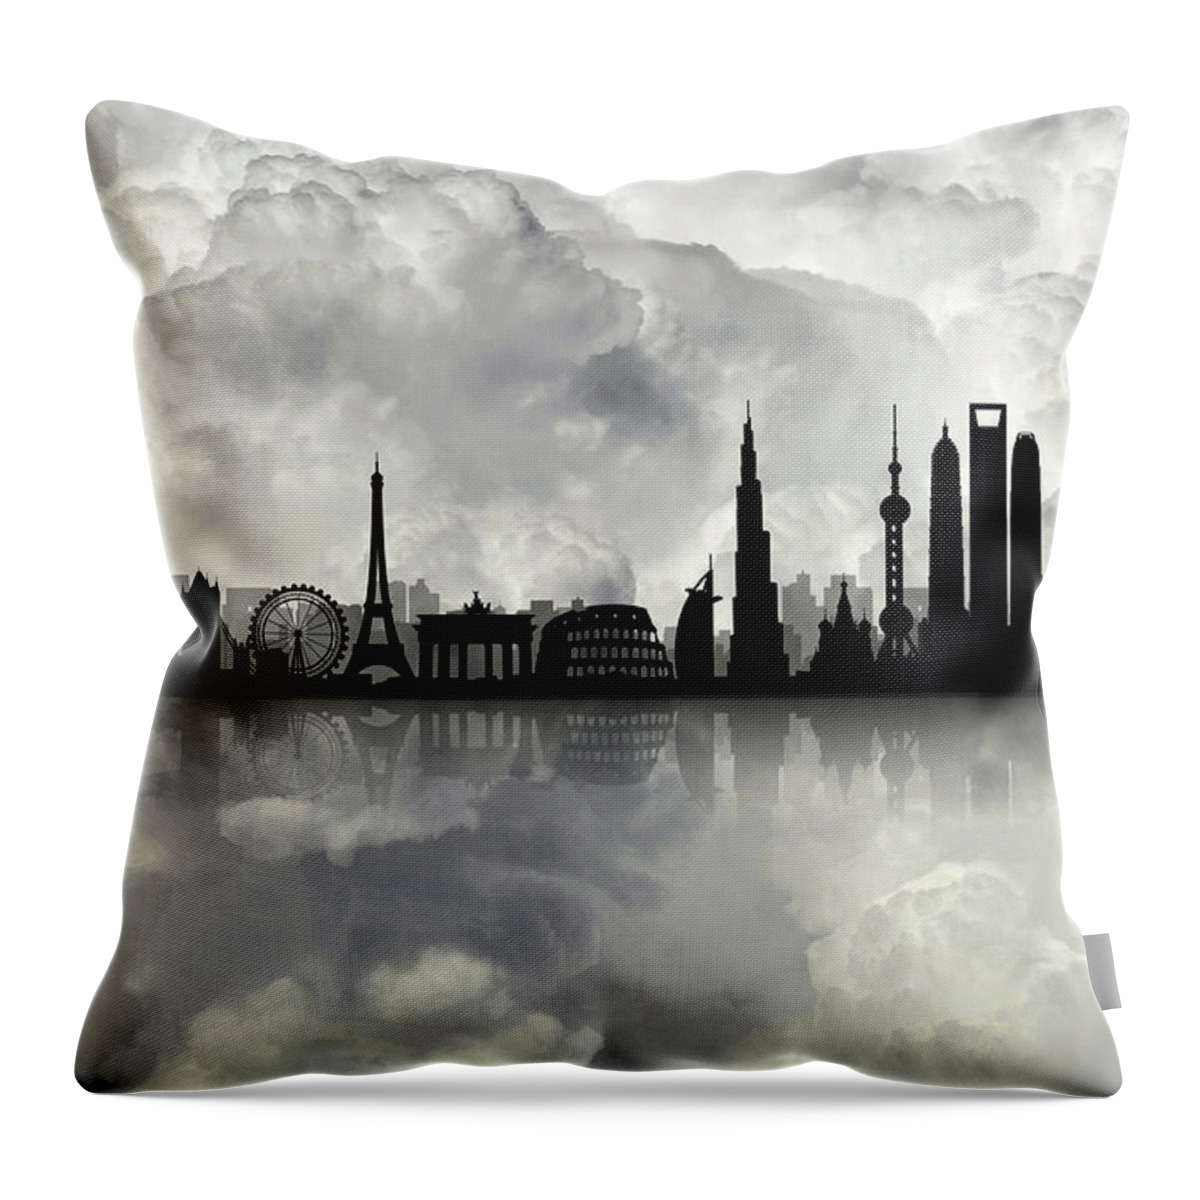 City Skyline Throw Pillow featuring the digital art The Best City skyline by Lilia S